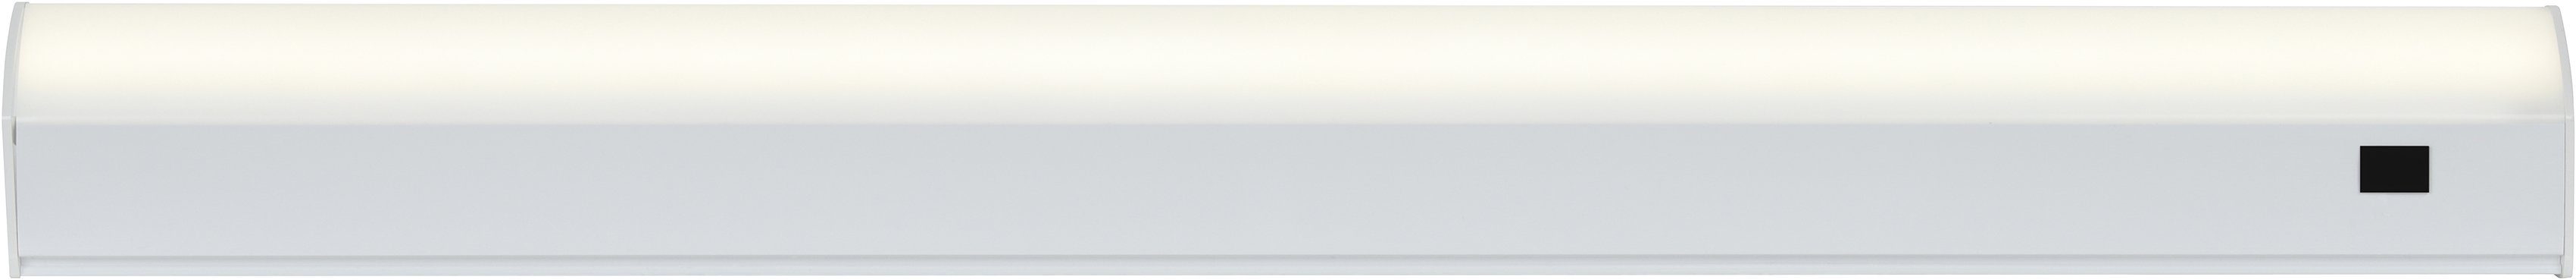 Nordlux 6W inkl. Unterschrankleuchte Lumen, Warmweiß, LED, Bity, LED fest inkl. integriert, 530 Bewegungssensor